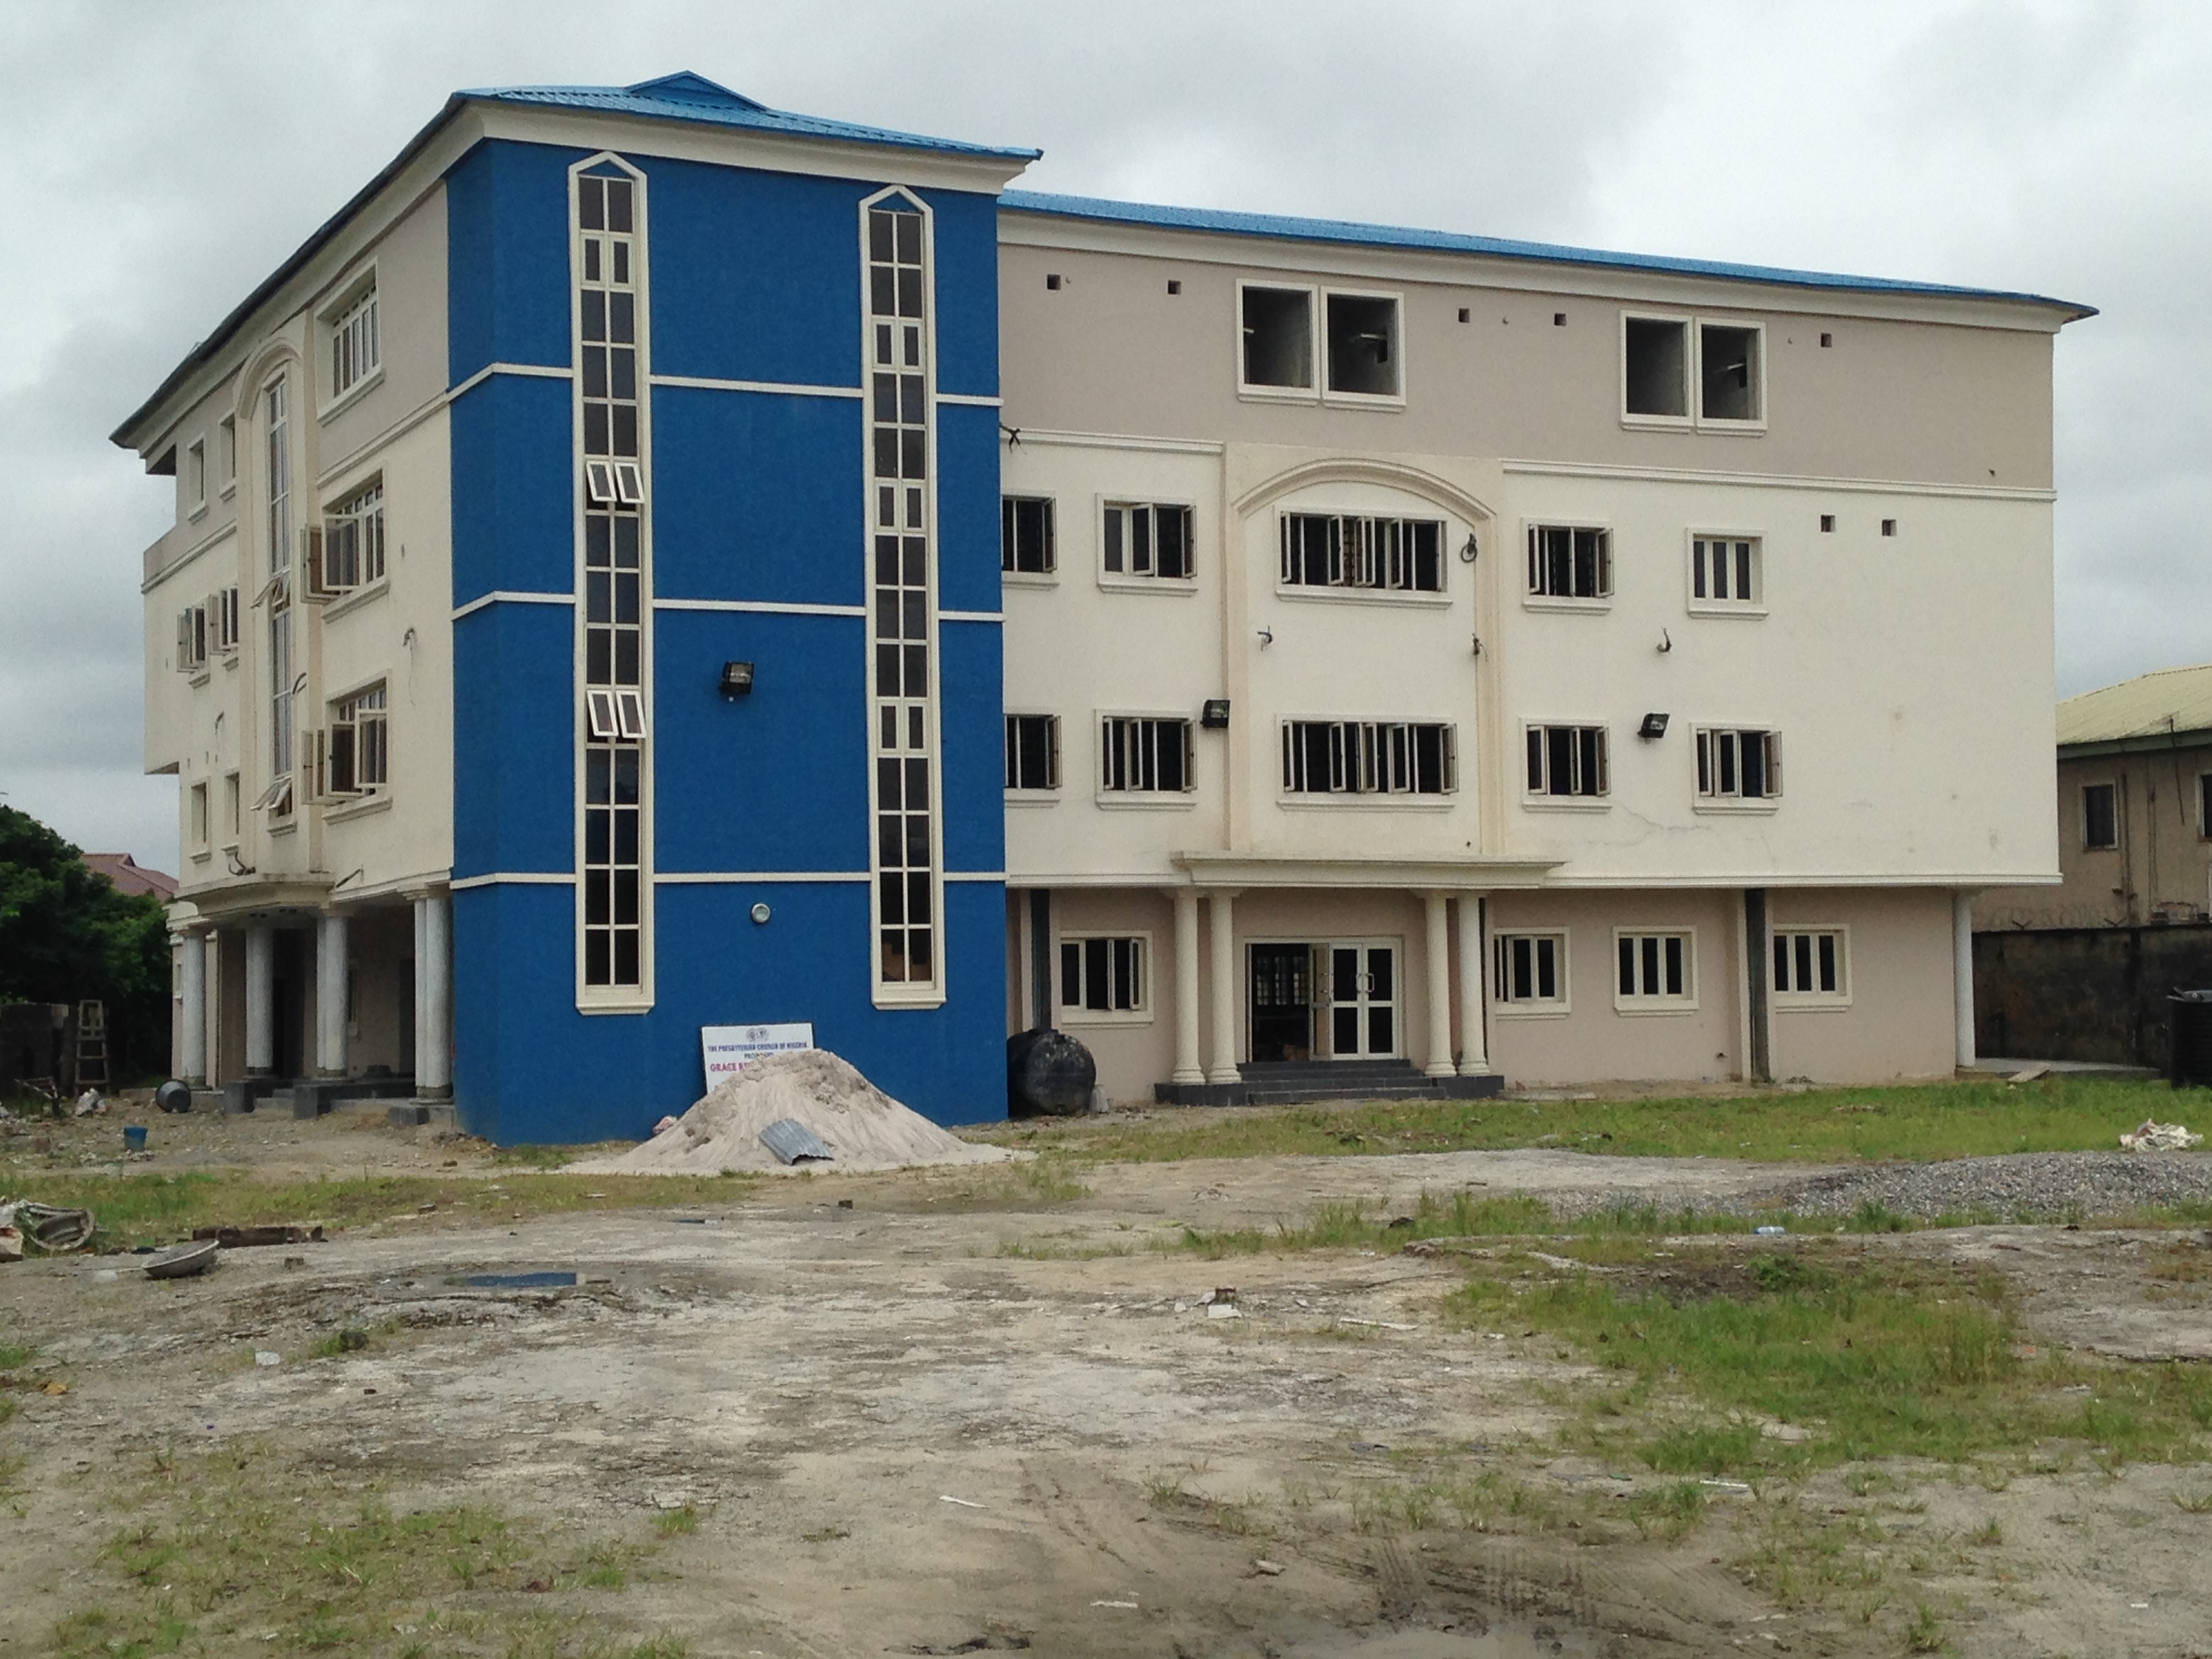 Presbyterian Church (Grace
Resource Centre) Abijo-Ibeju,
Lekki, Lagos